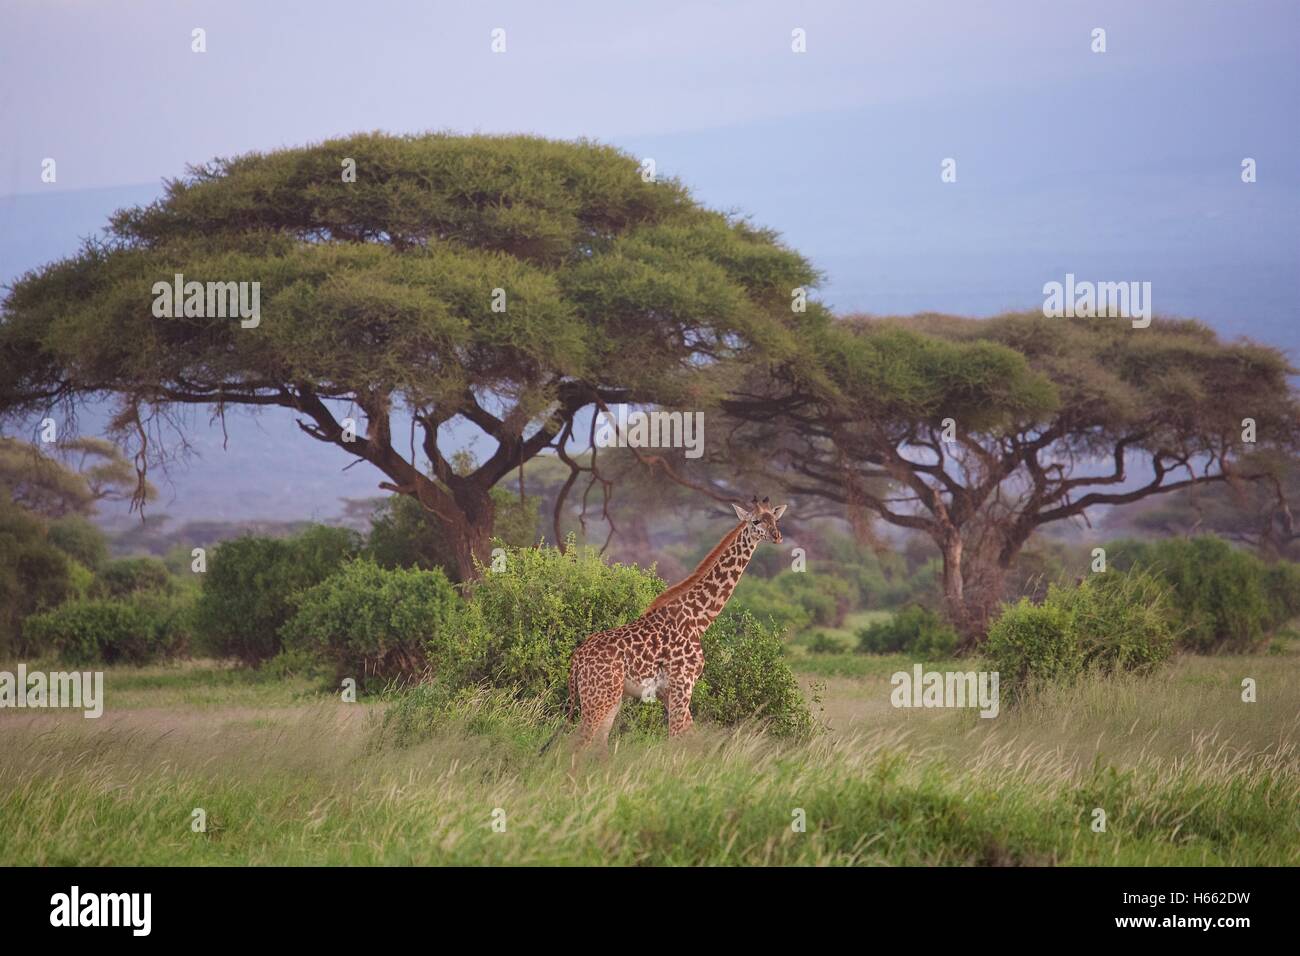 Viewing giraffes on safari in Amboseli National Park, Kenya. Stock Photo